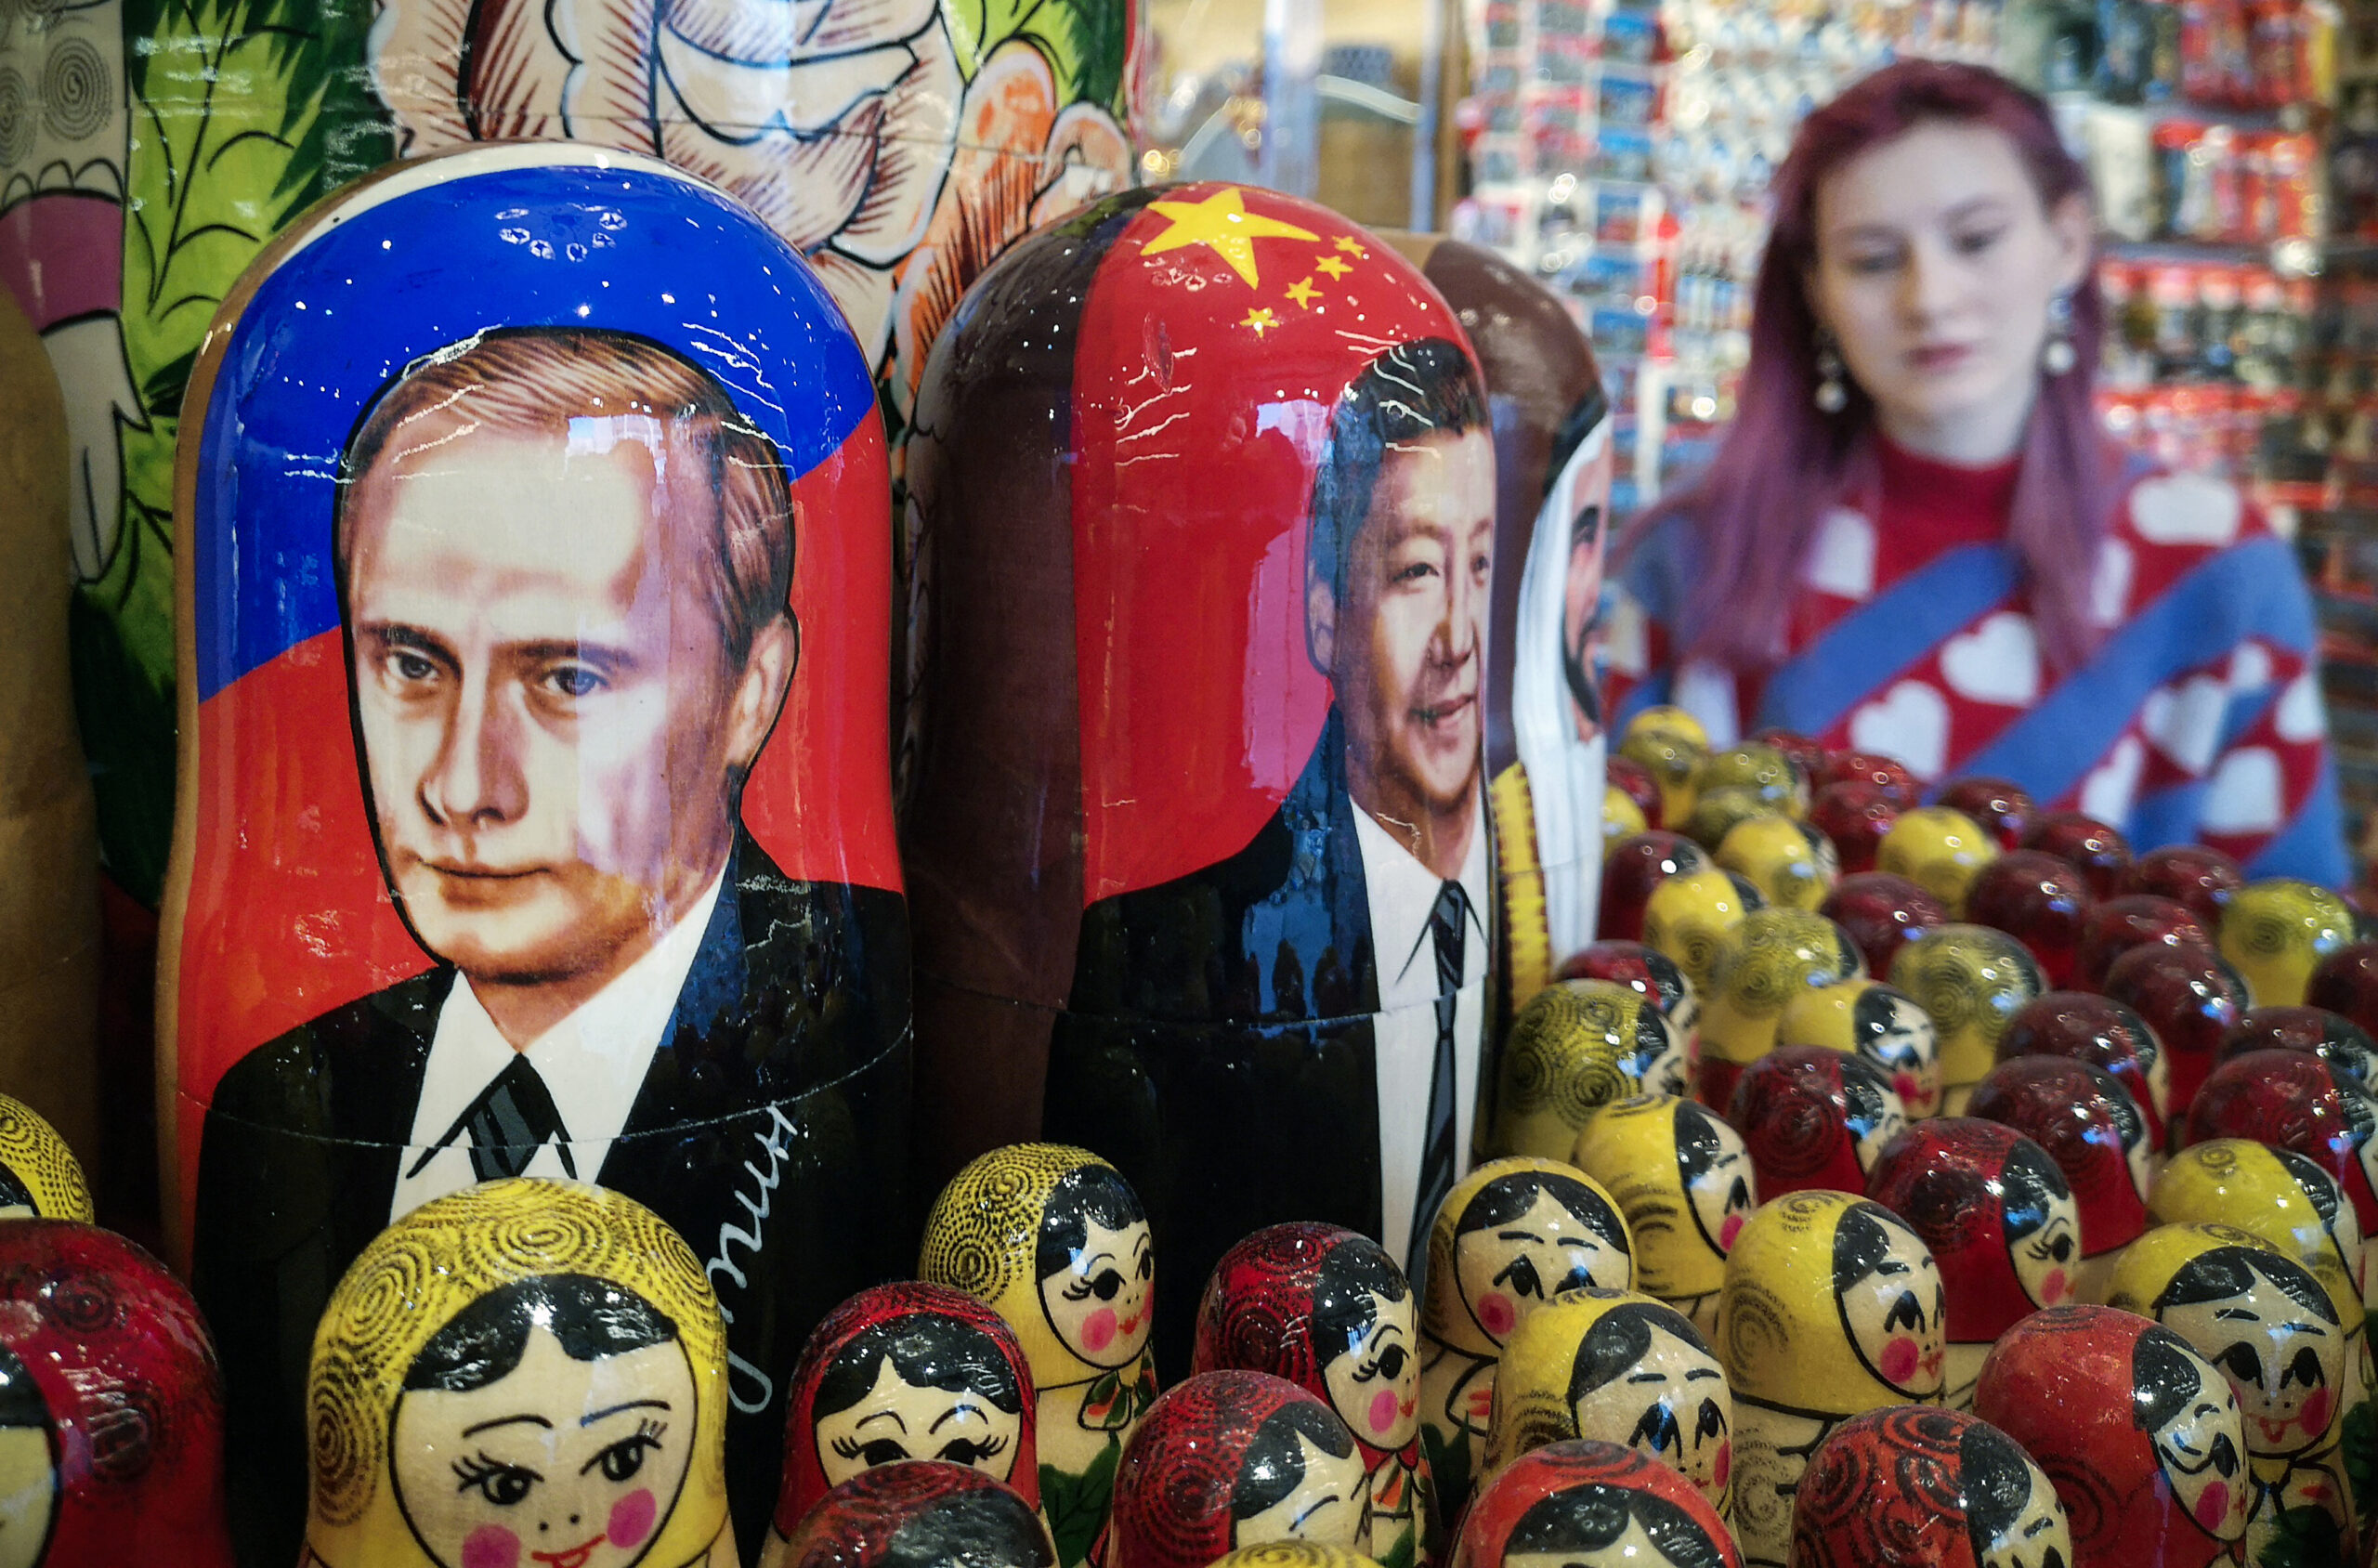 China congratulates Putin on election victory